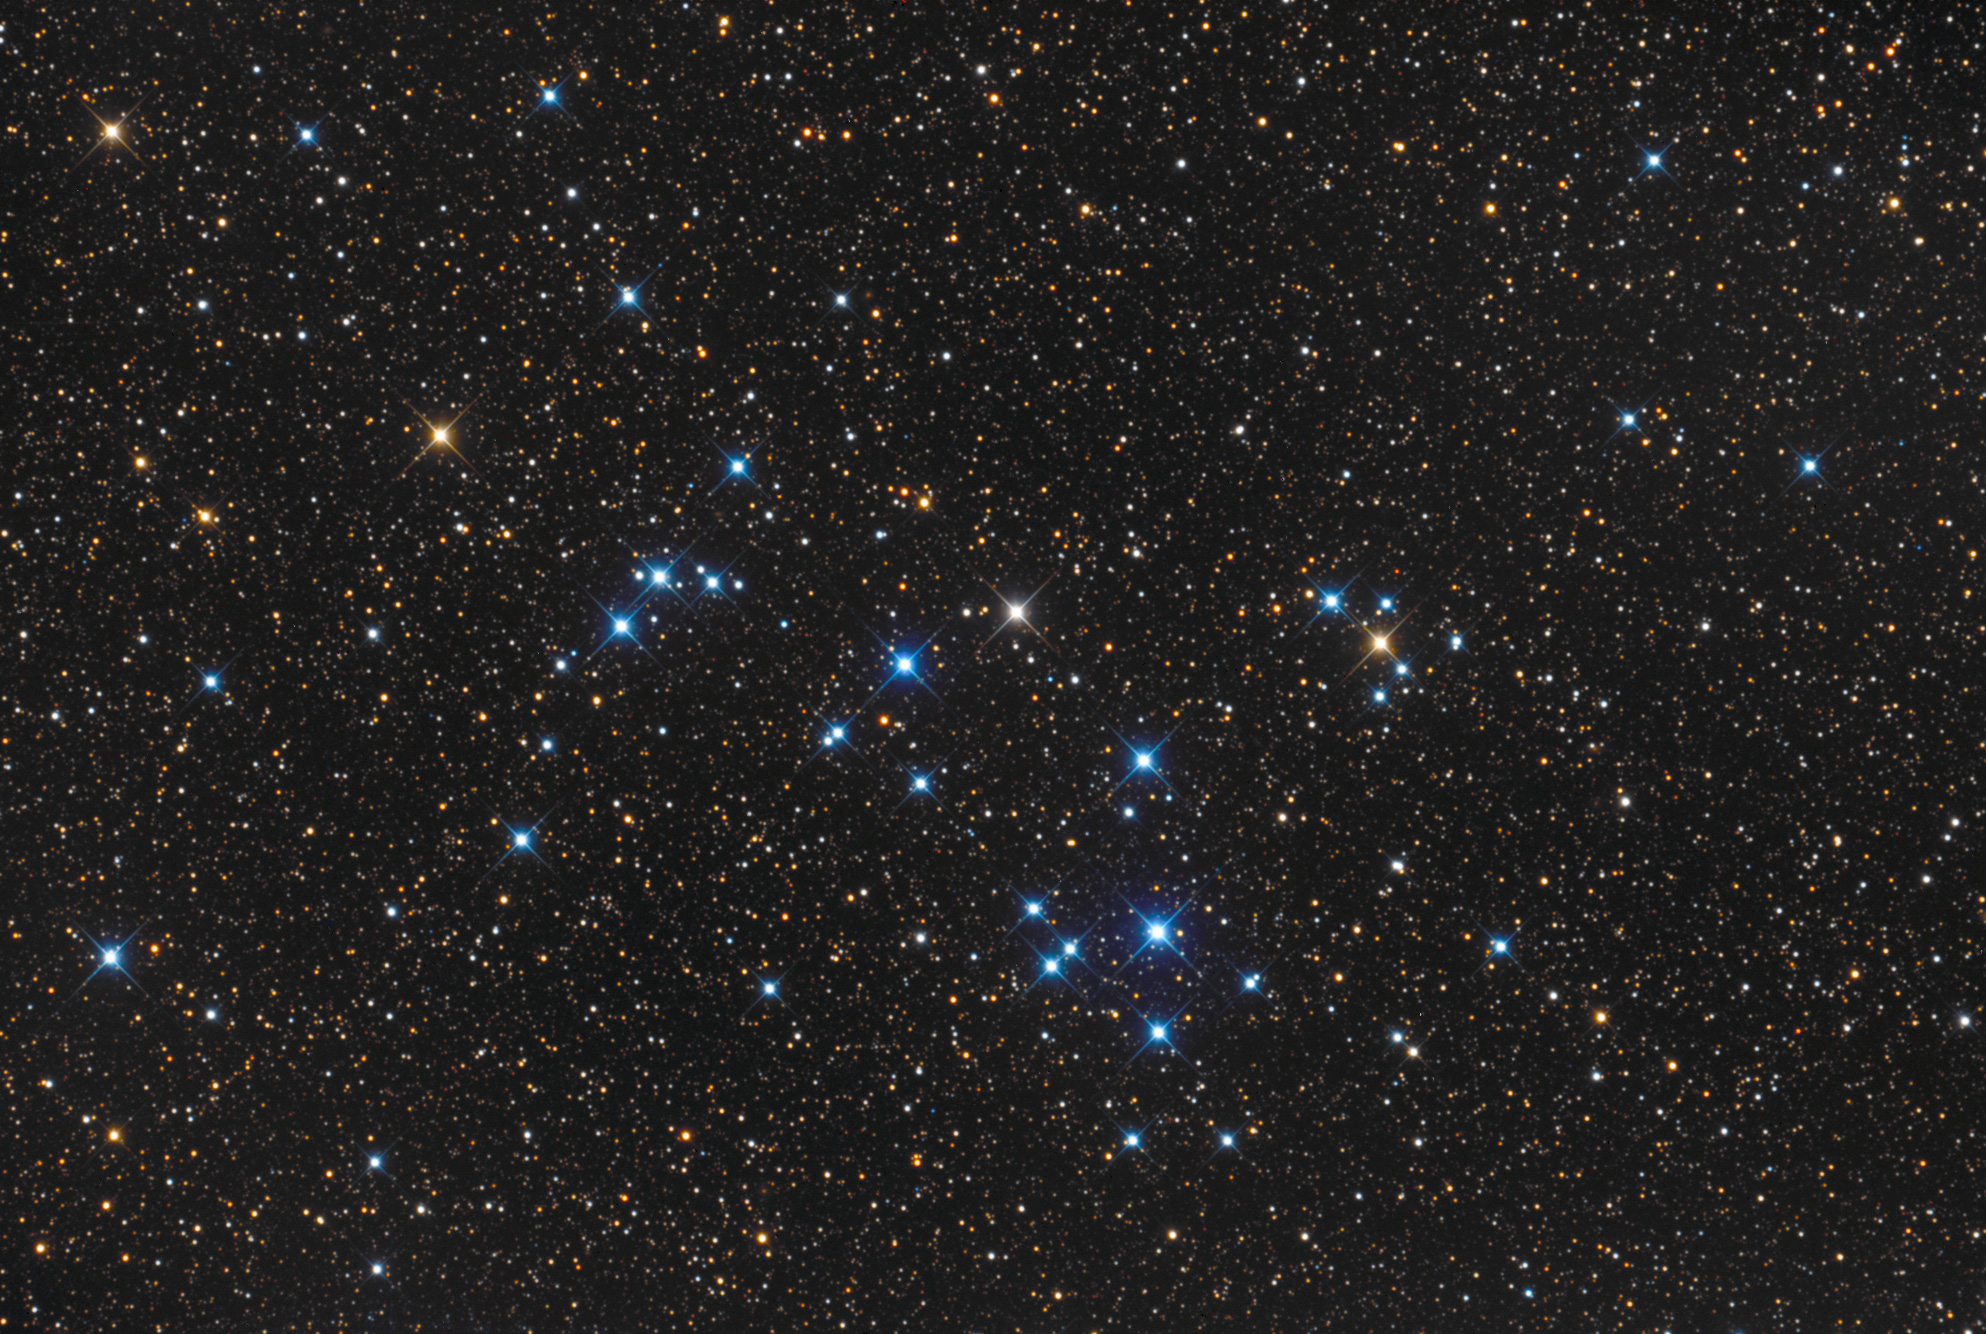 Dazzling Star Cluster Shines in Stargazer's Photo | Space